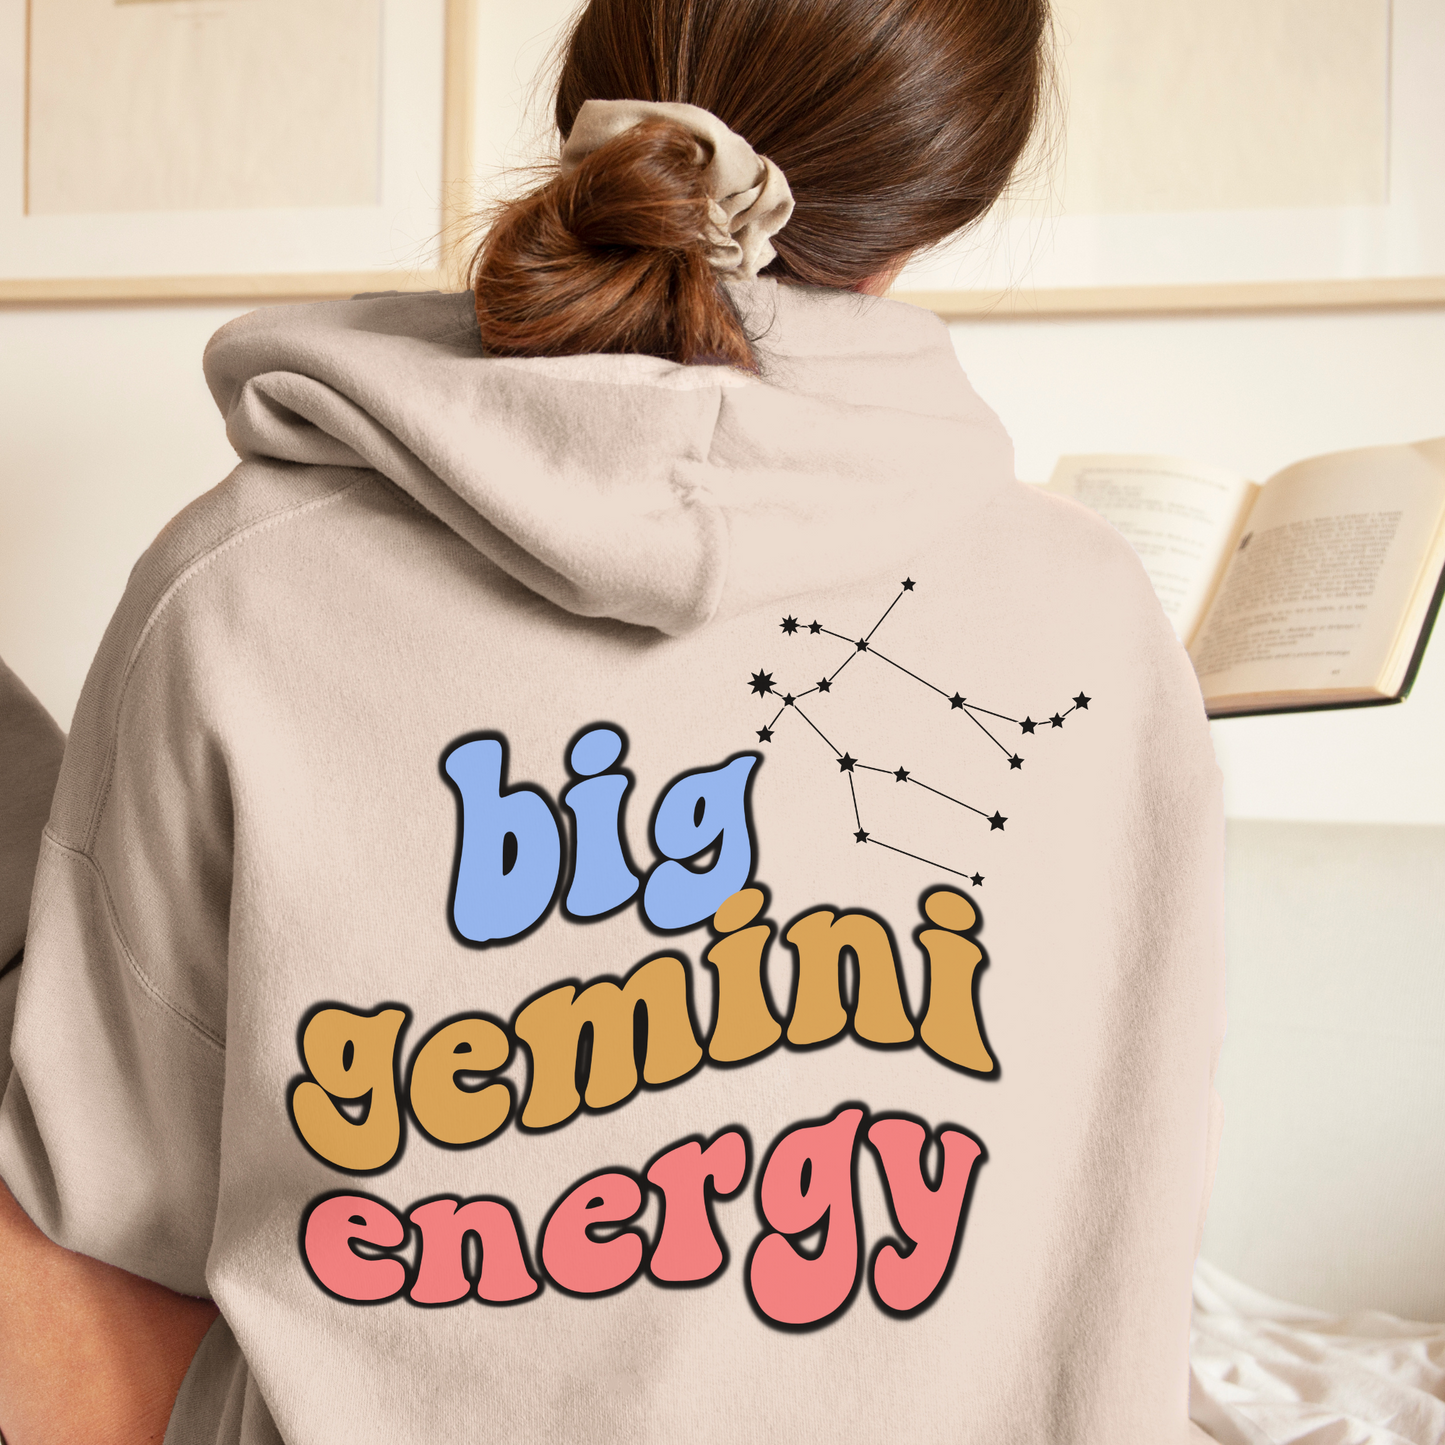 Big Gemini energy Hoodie, Gemini Sweatshirt, Astrology lover gift, Zodiac sweatshirt, Xmas gift for Gemini, Astrology